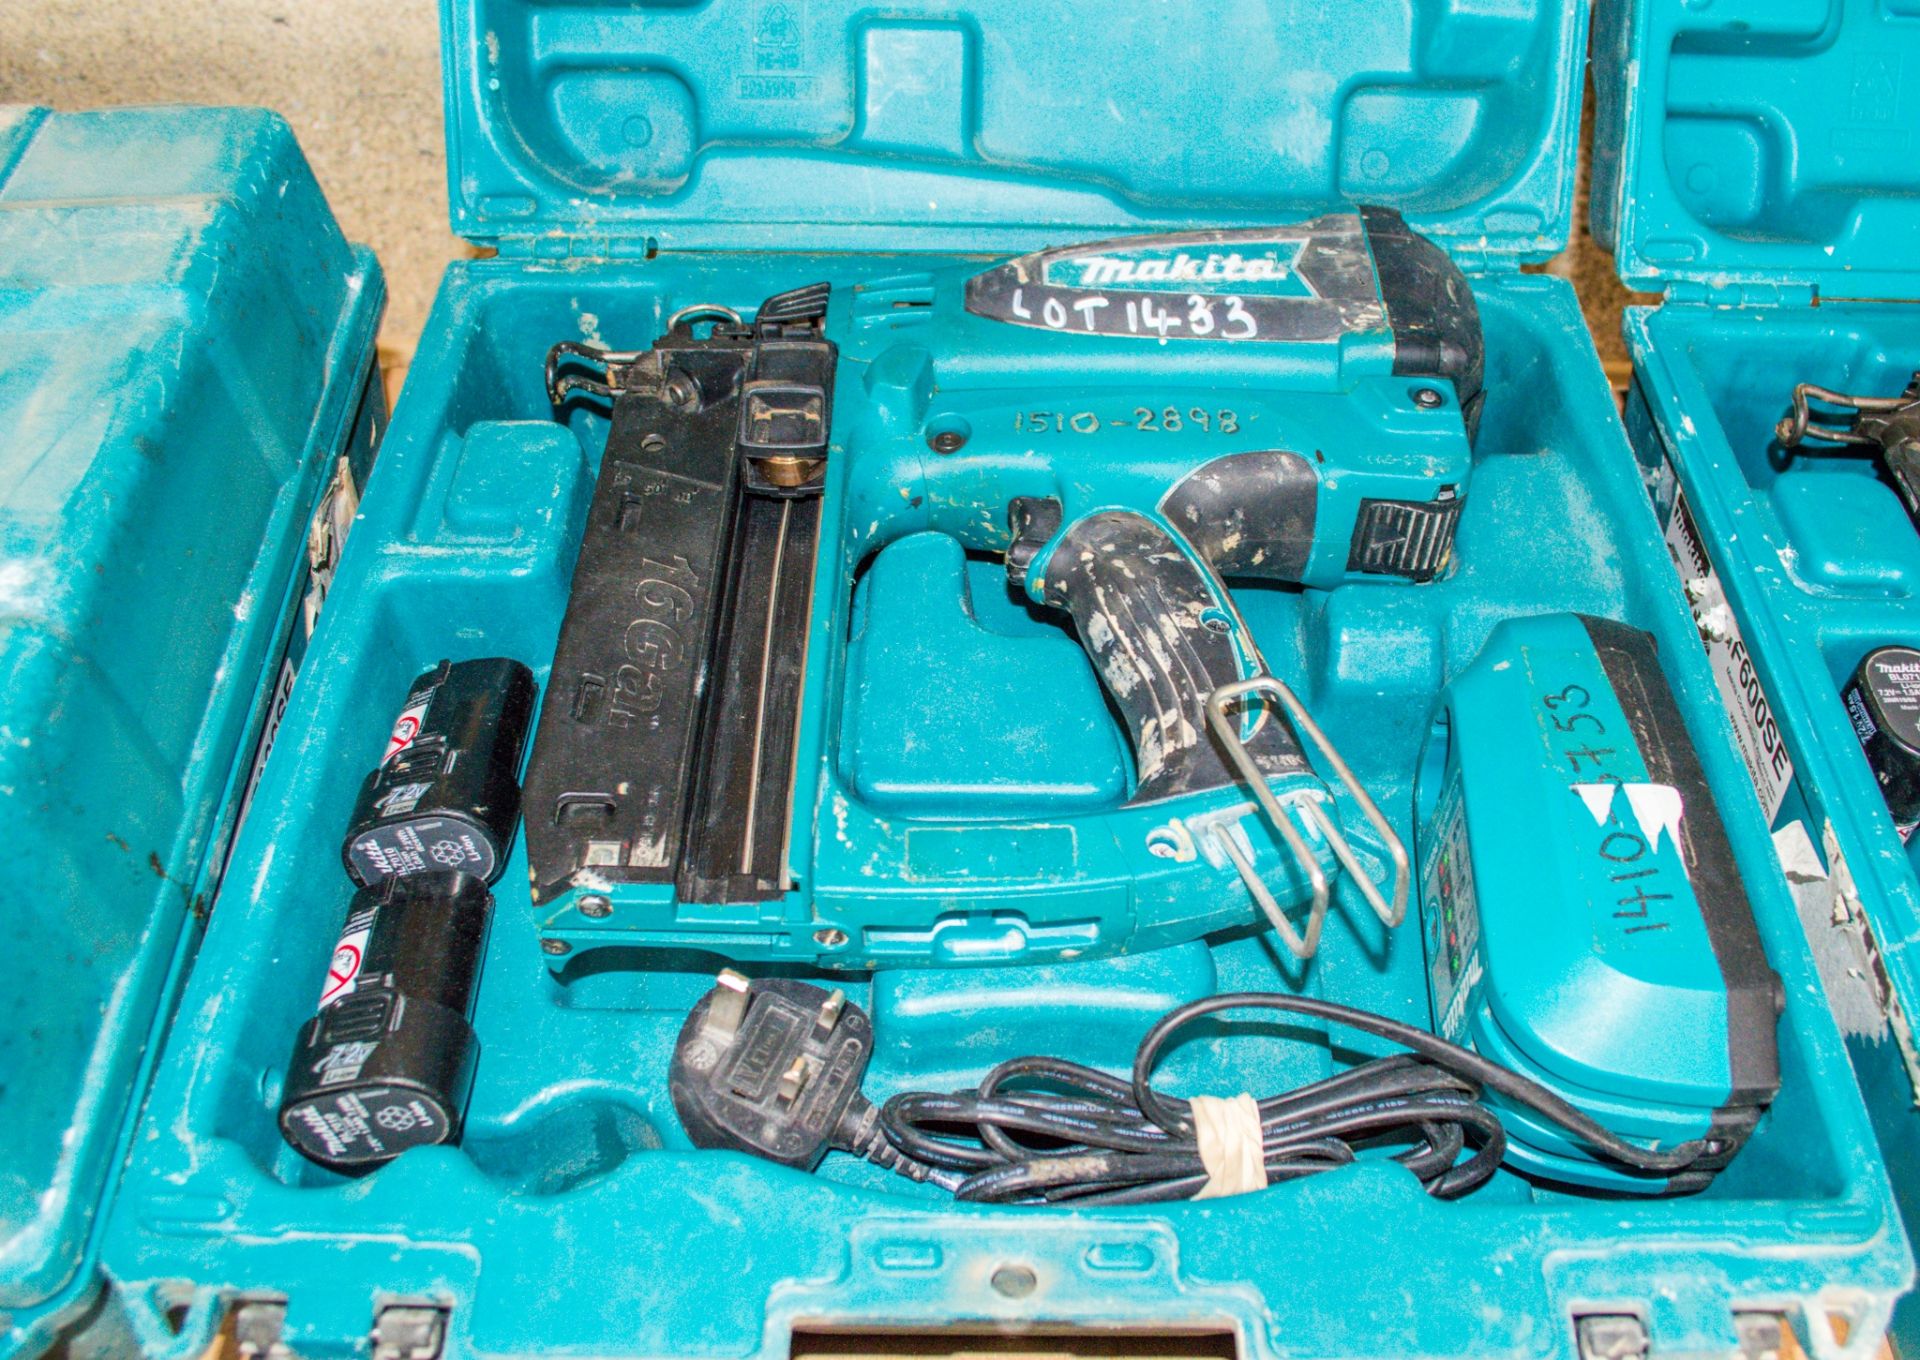 Makita GF600 7.2v nail gun c/w battery, charger & carry case 1510-2898